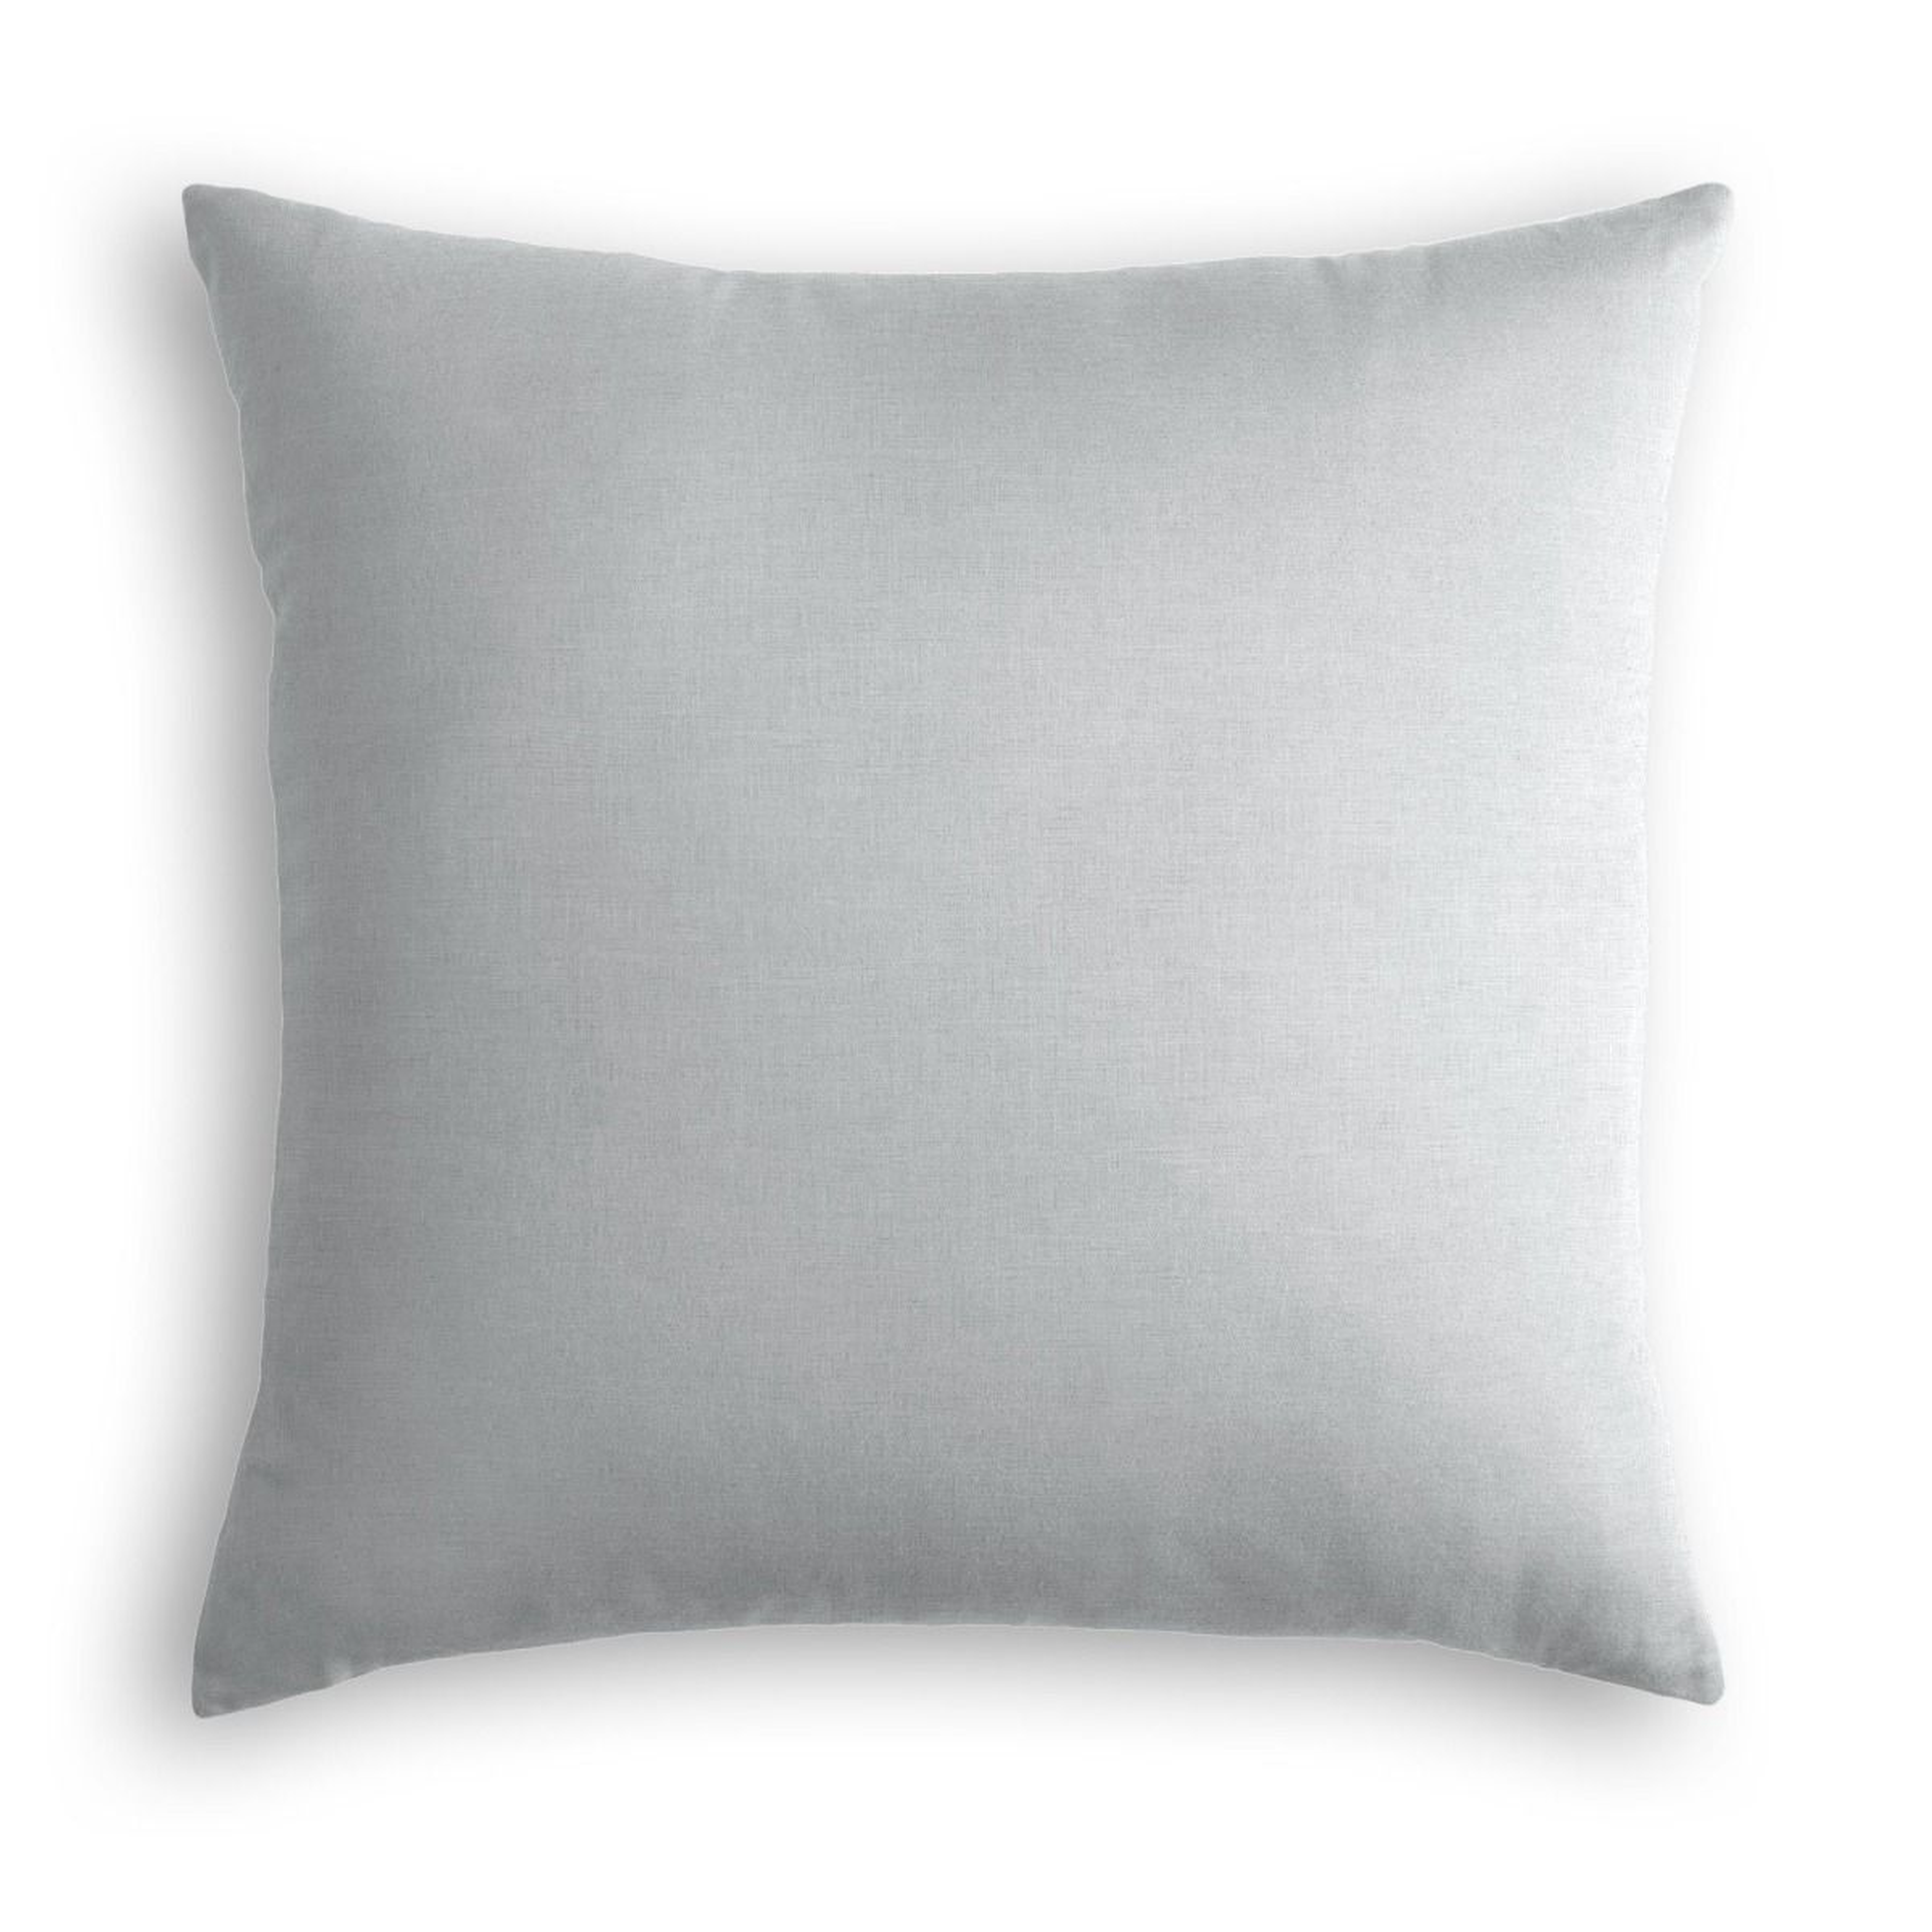 Classic Linen Pillow, Classic Gray, 22" x 22" - Havenly Essentials